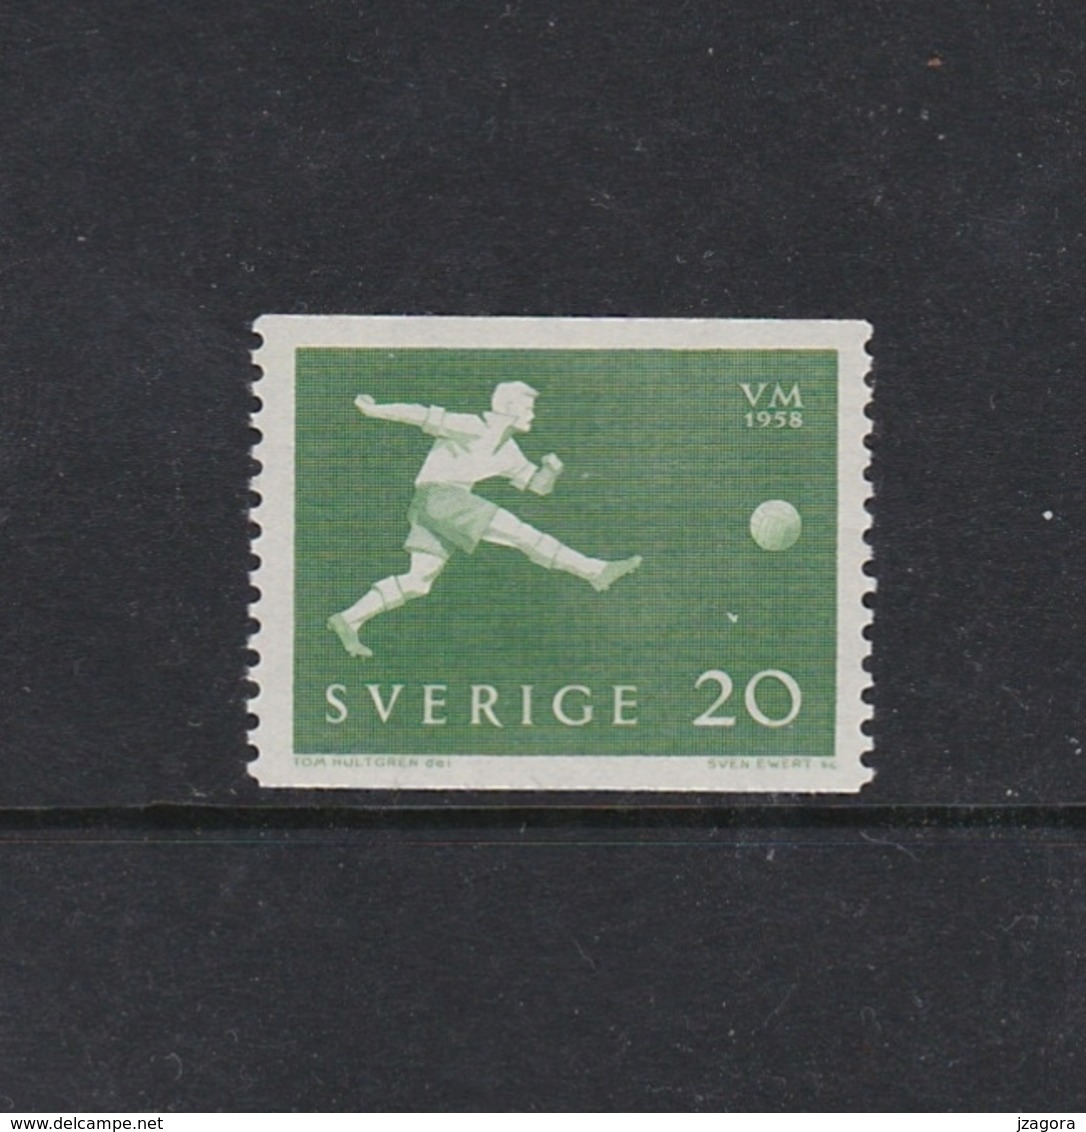 SOCCER FOOTBALL WORLD CHAMPIONSHIP - MUNDIAL 1958 - SWEDEN SCHWEDEN SUEDE MI 439 A MNH - 1958 – Svezia